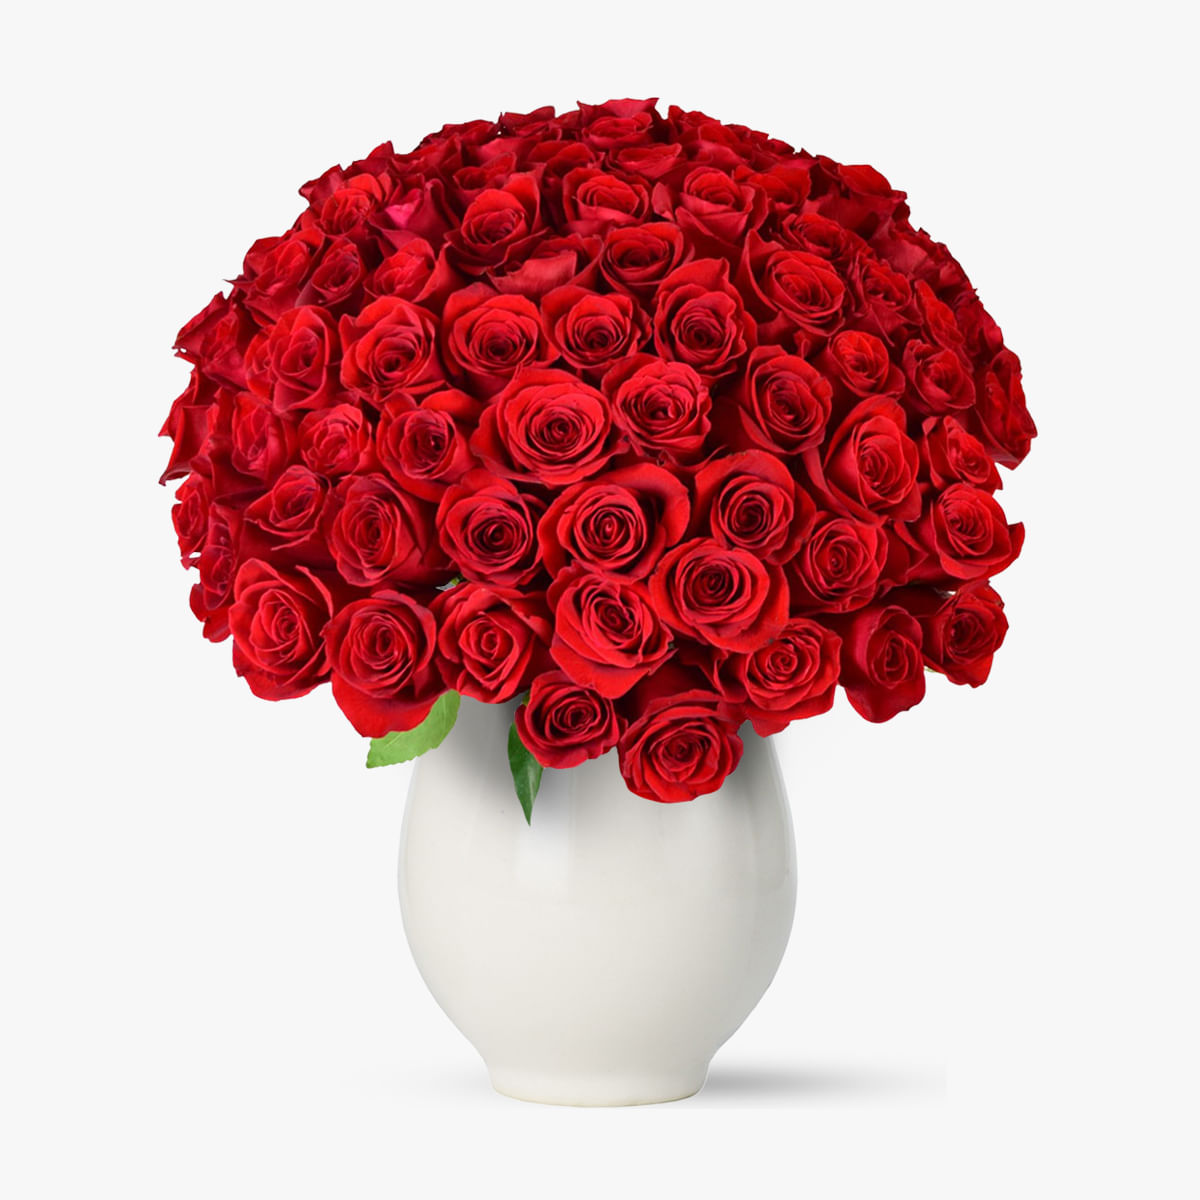 Buchet de 101 trandafiri rosii – Standard 101